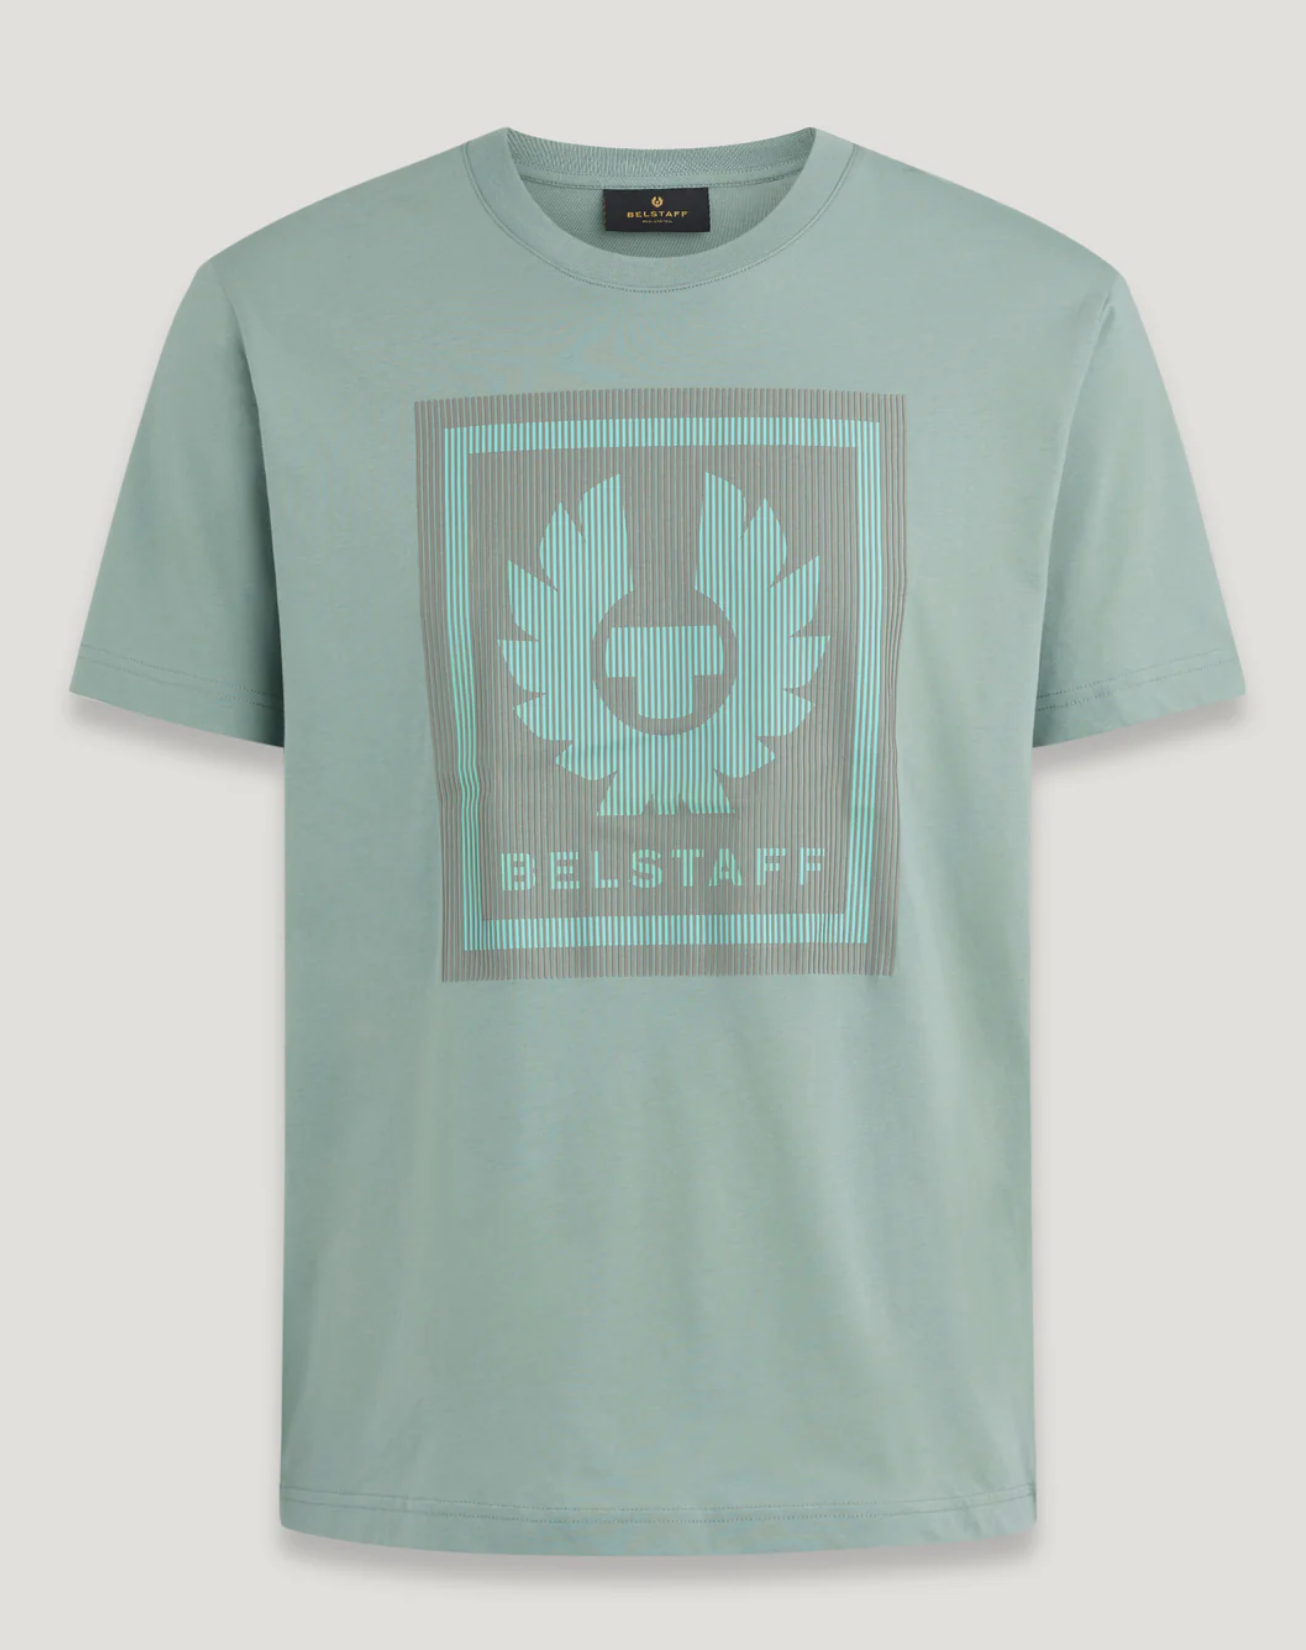 Belstaff "ILLUSION" T-Shirt Green